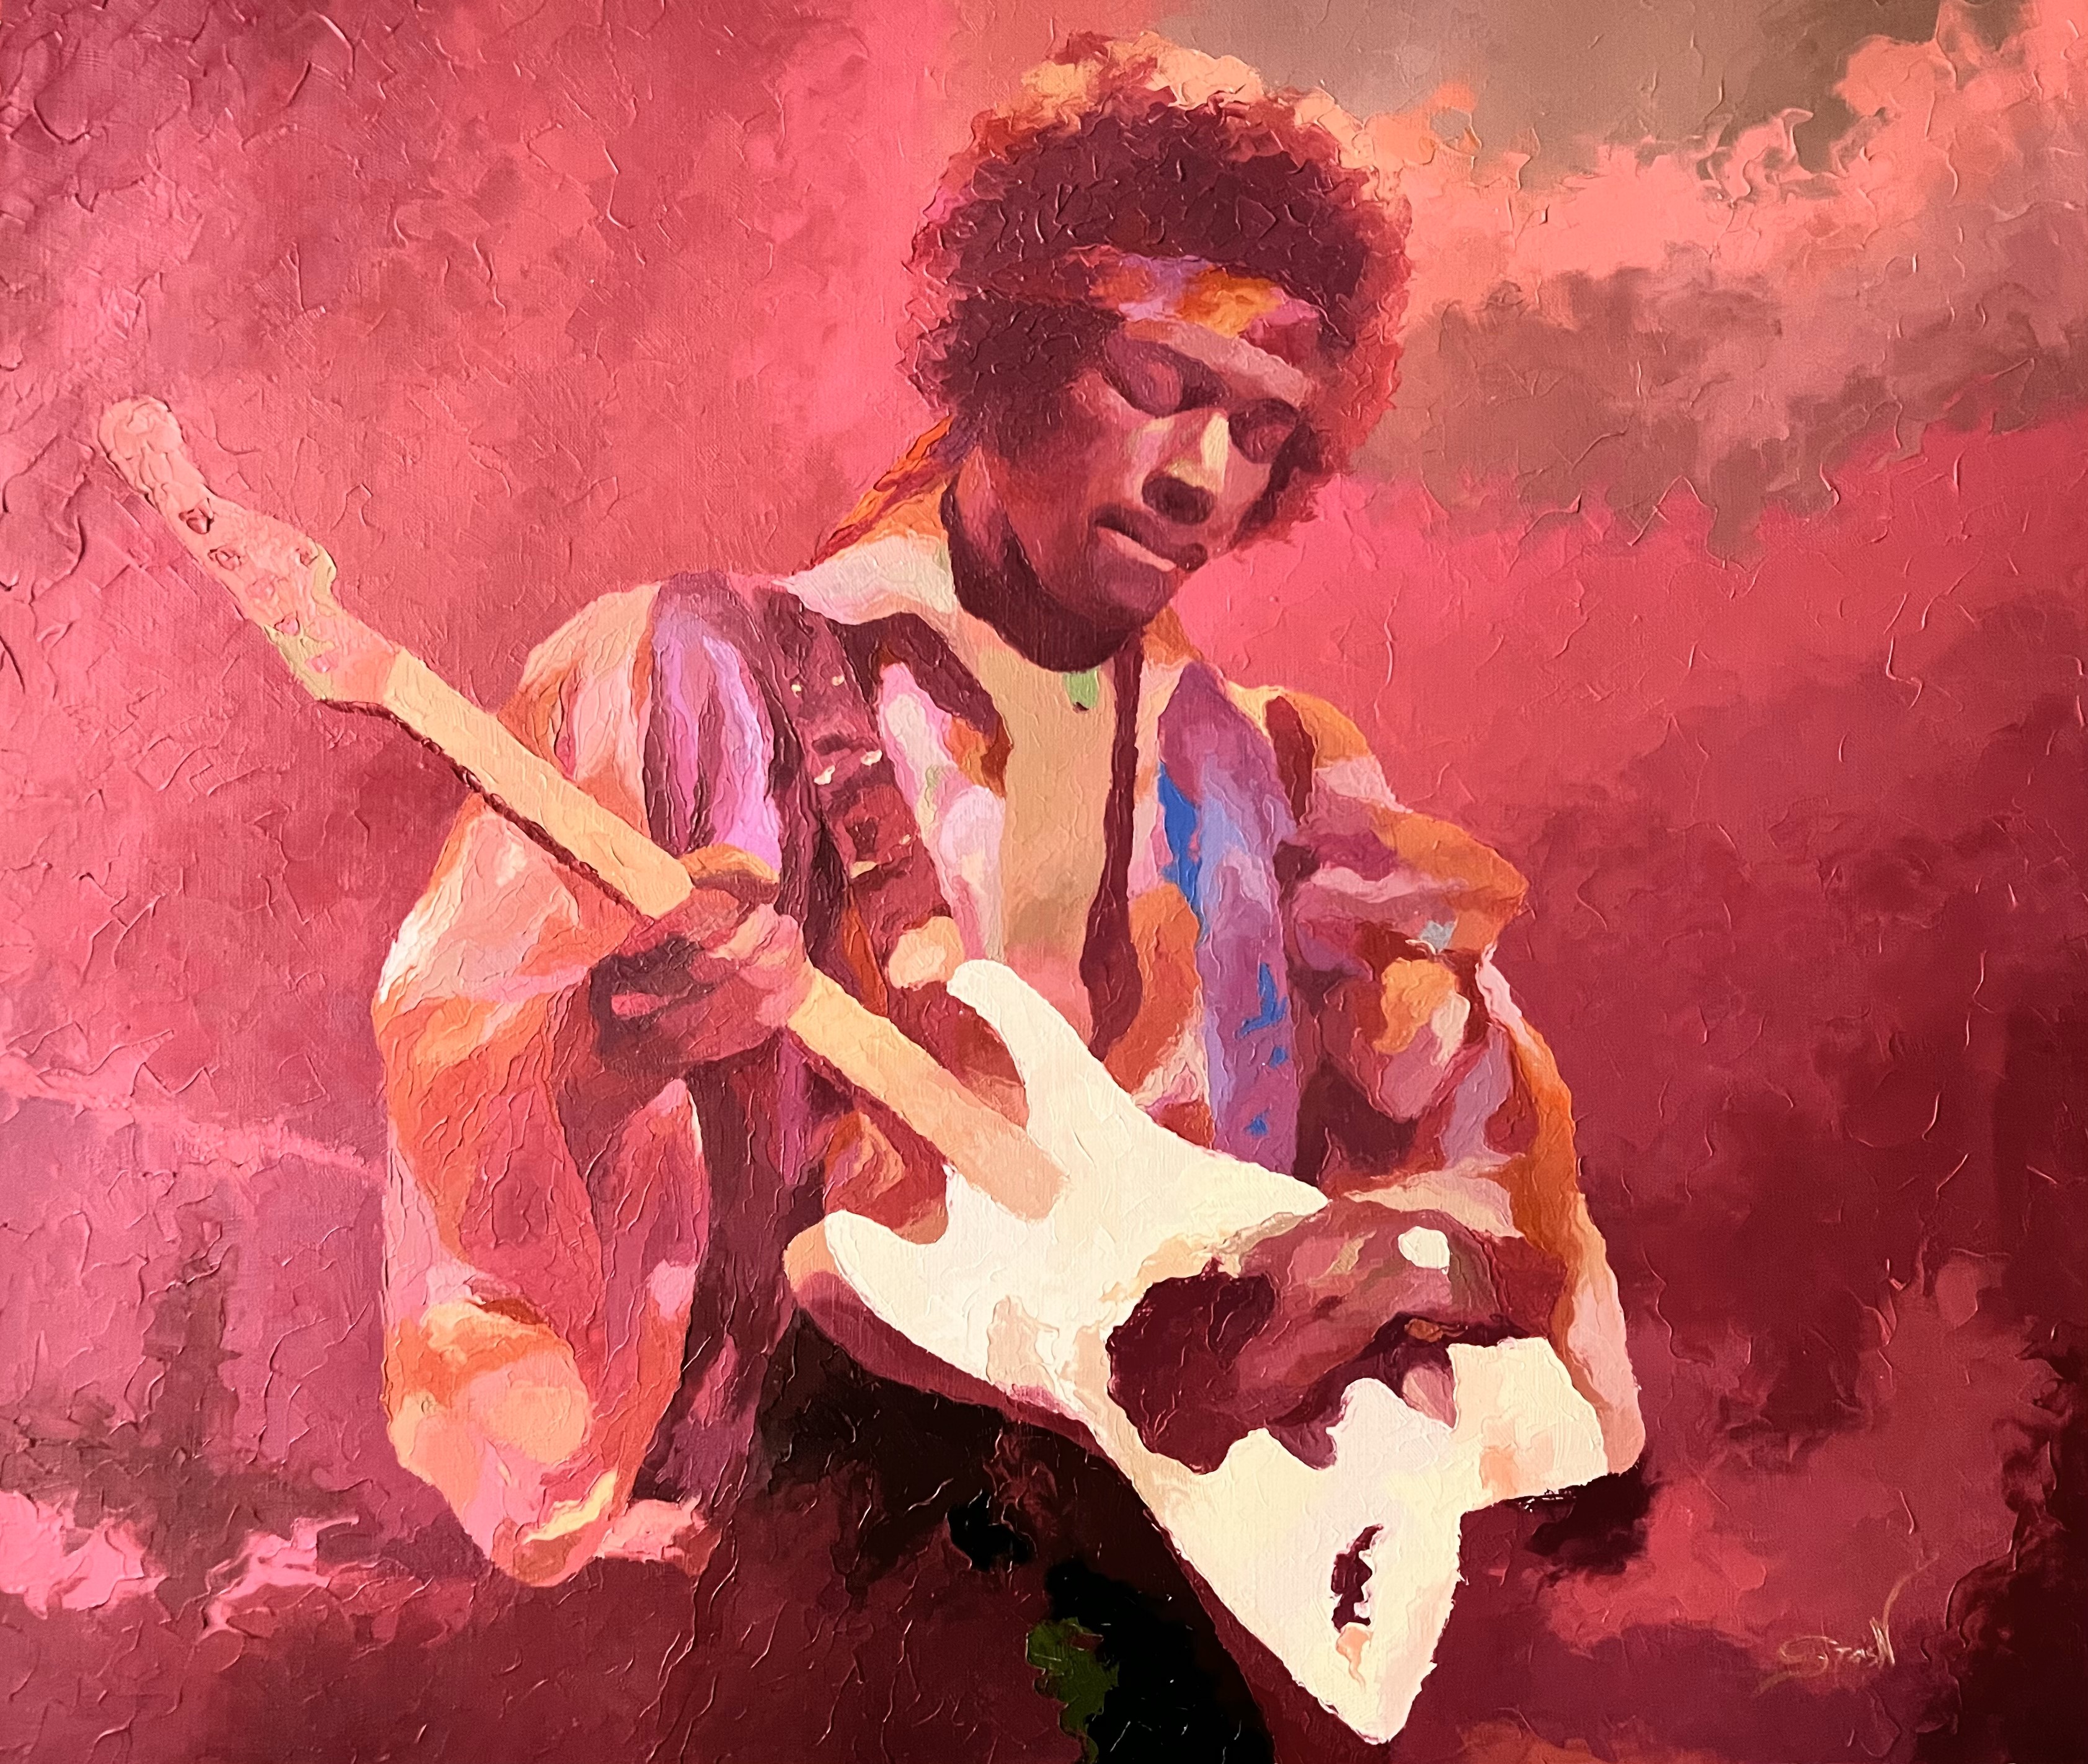 STAS NAMIN - Jimi Hendrix - Oil on Canvas - 25x30 inches